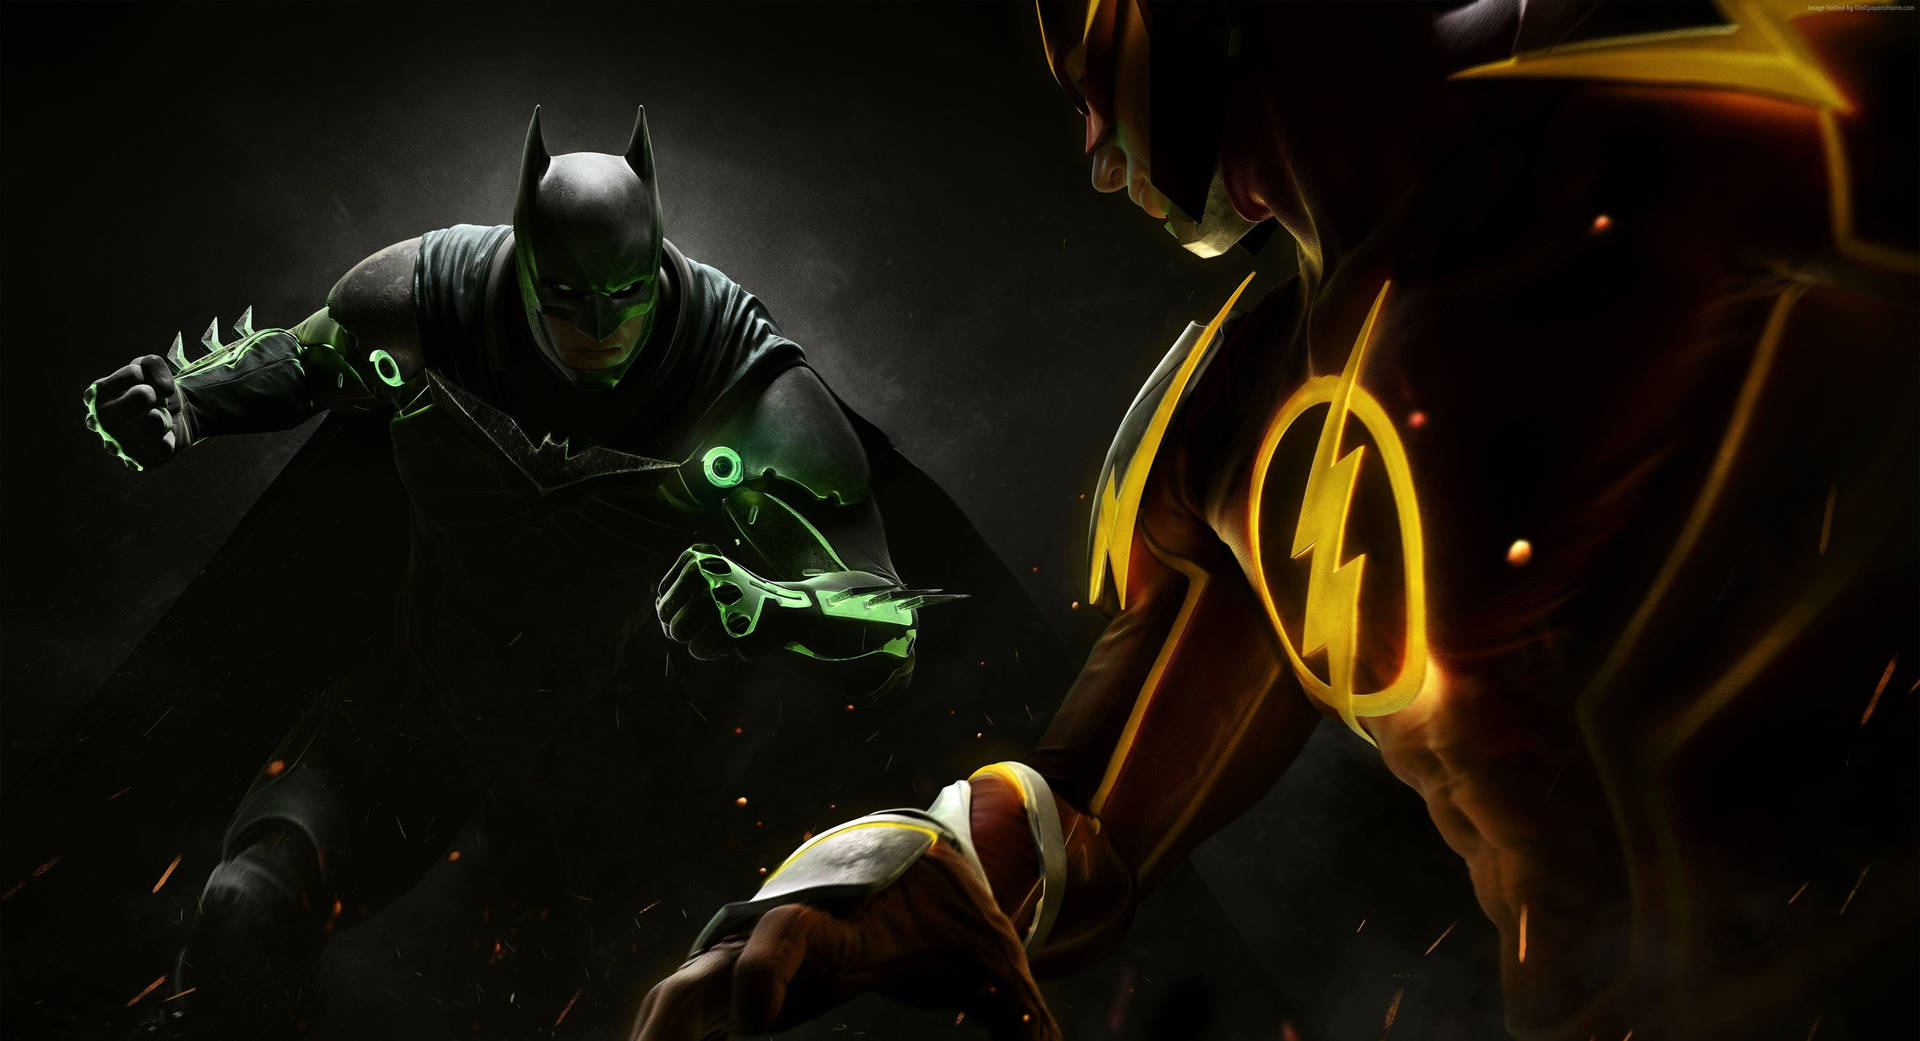 Batman And Flash In Battle 4K PS4 Wallpaper